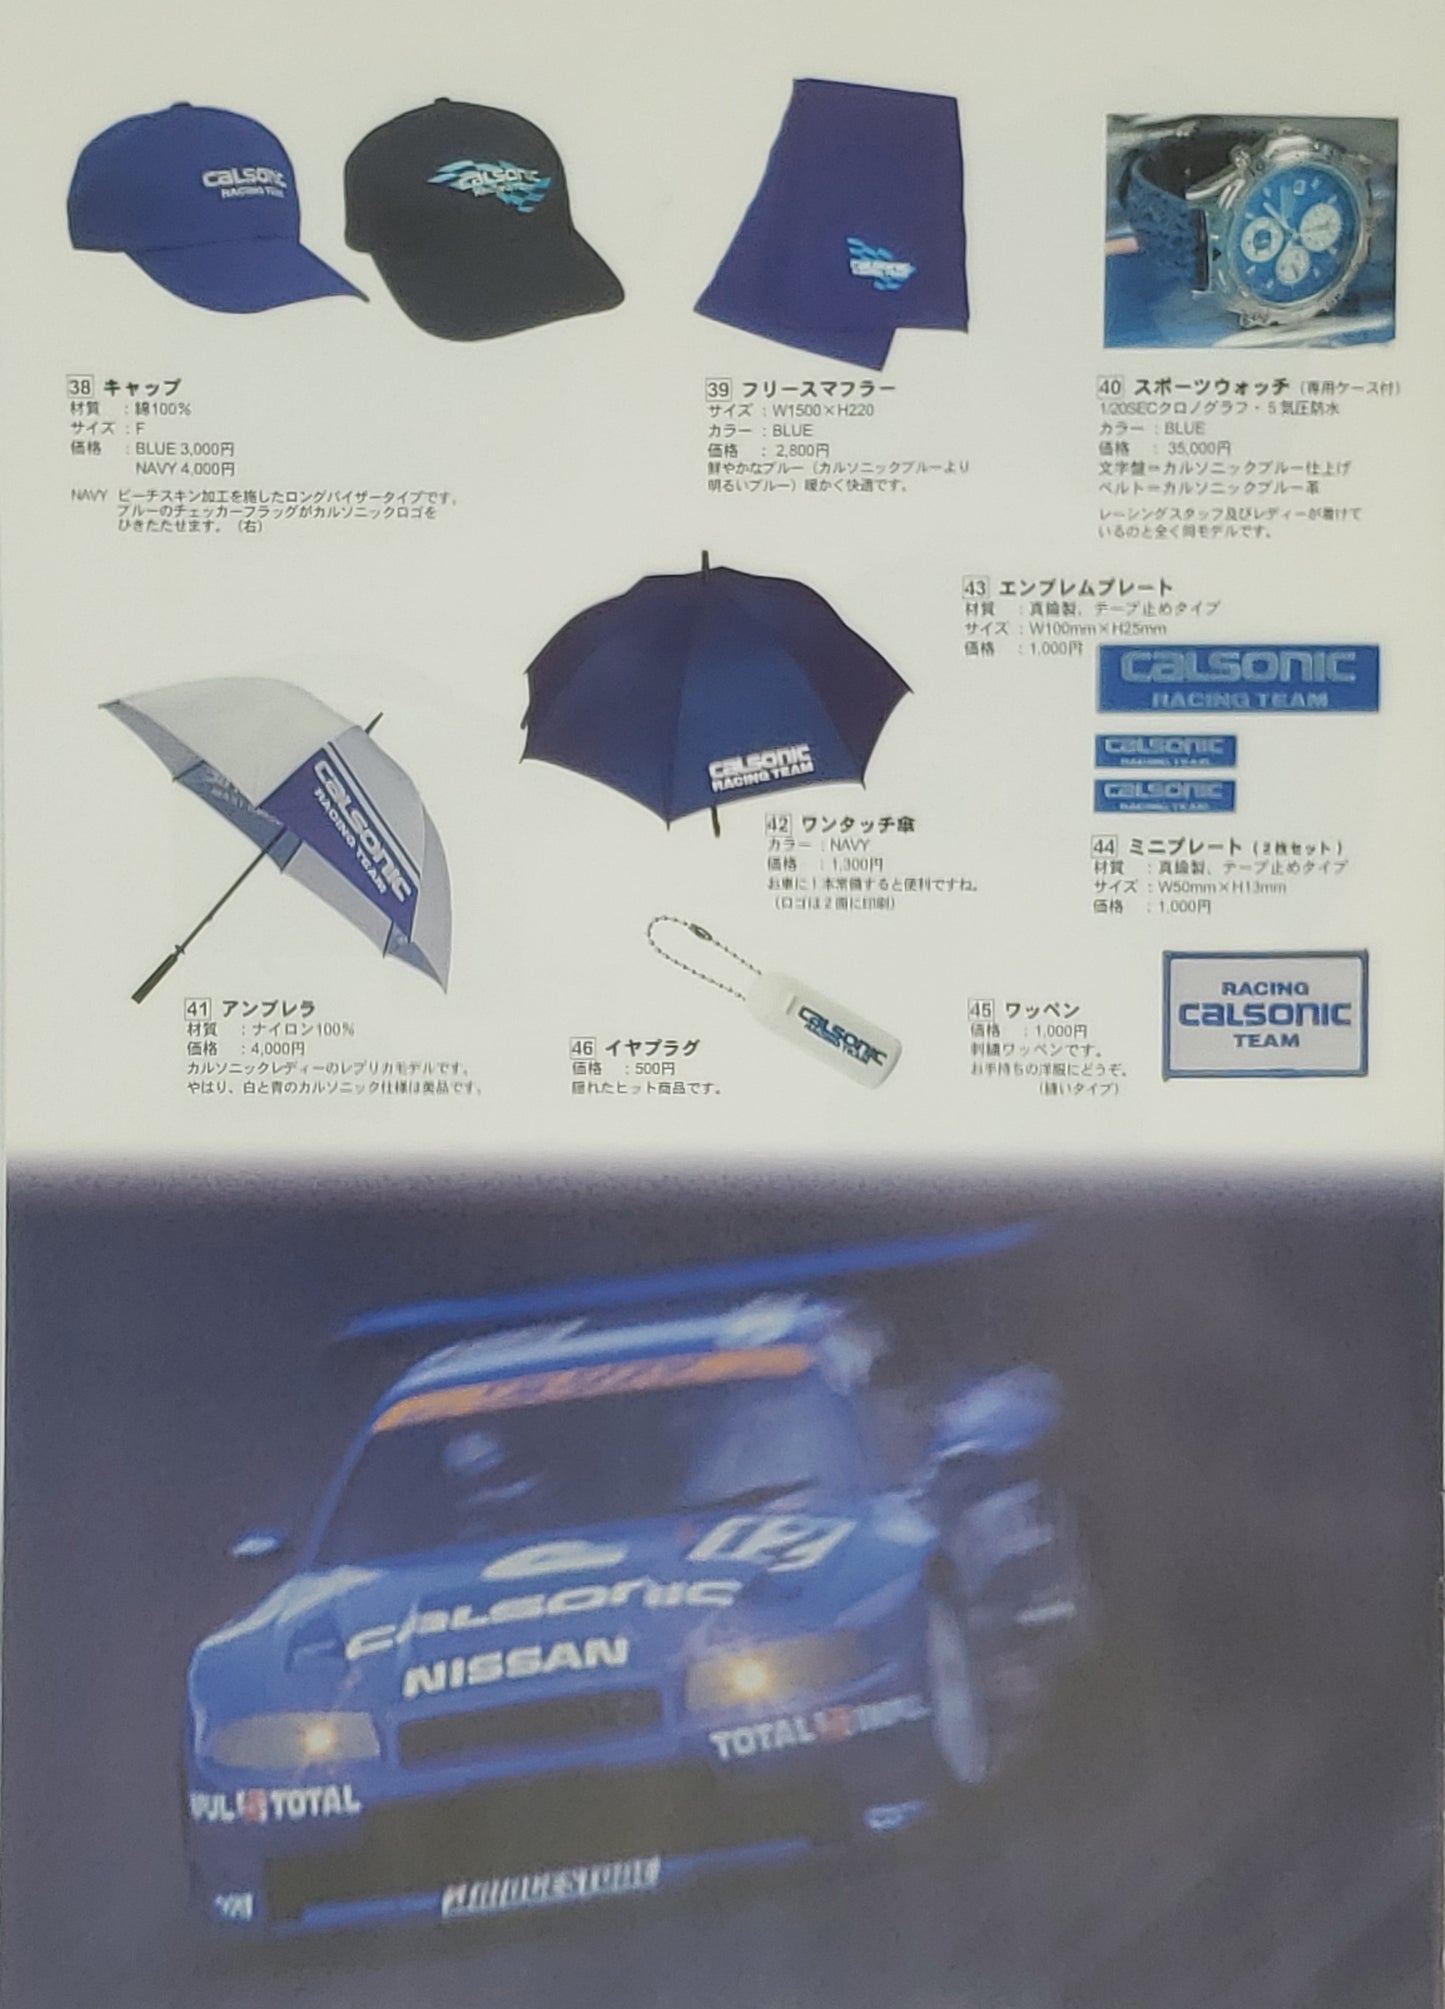 Calsonic Sponsor catalog 2000-2001